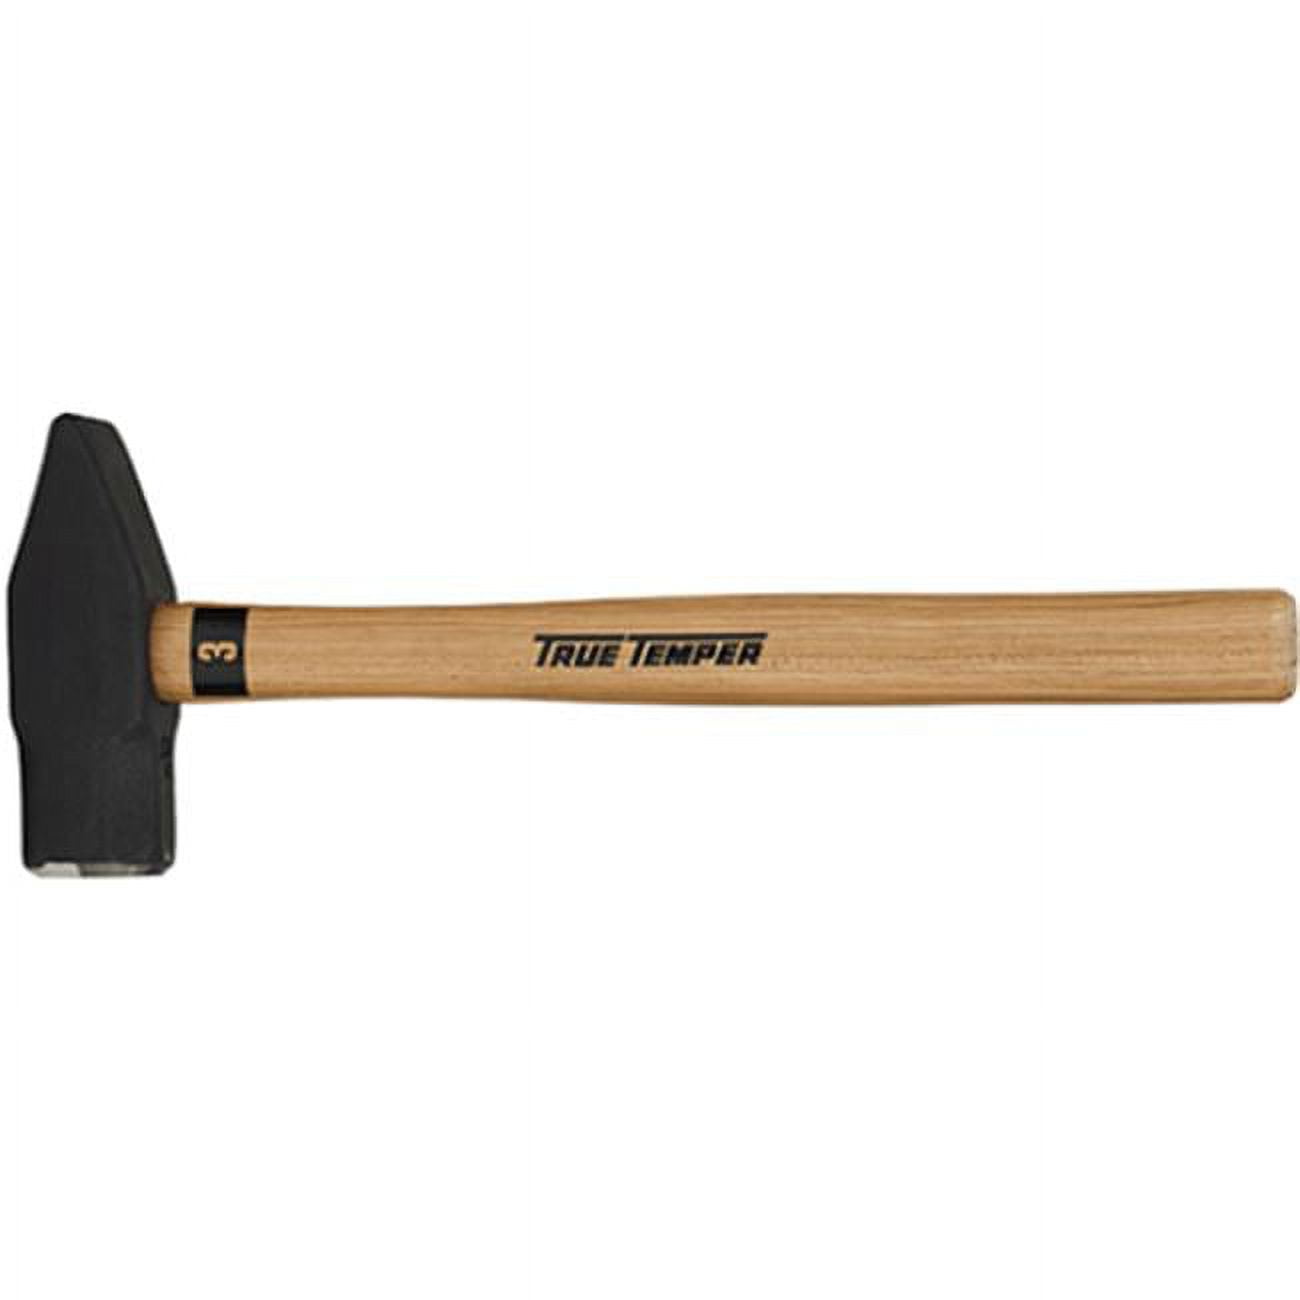 Ames True Temper 20184400 3 Lbs Wood-handled Sledge Hammer